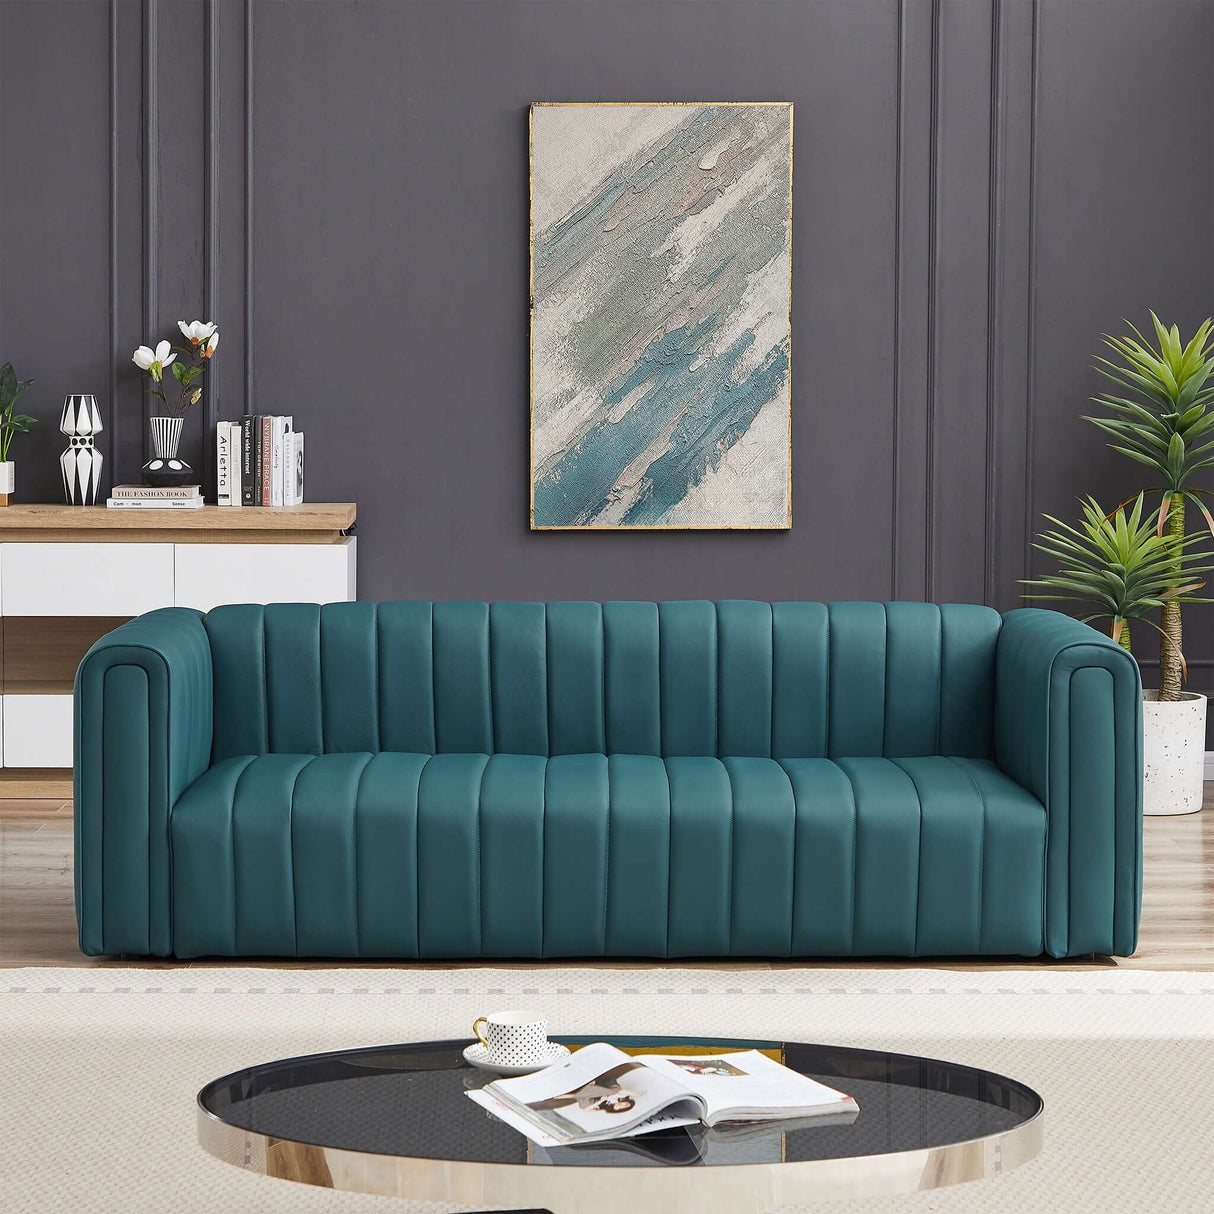 Mid-Century Modern Blue Genuine Leather Channel Tufted Square Arm Sofa - AFC02046 - Luna Furniture